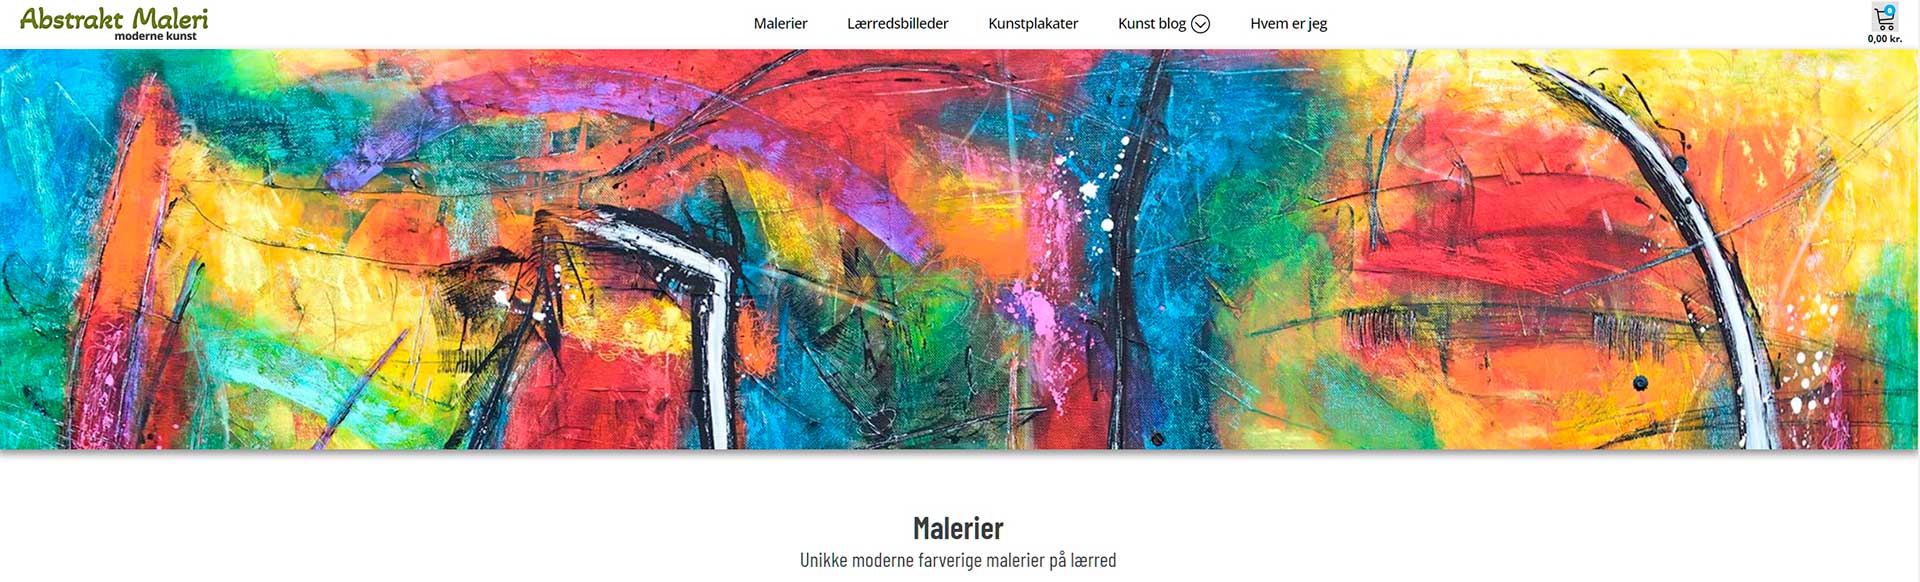 Webshop malerier abstraktmaleri.dk